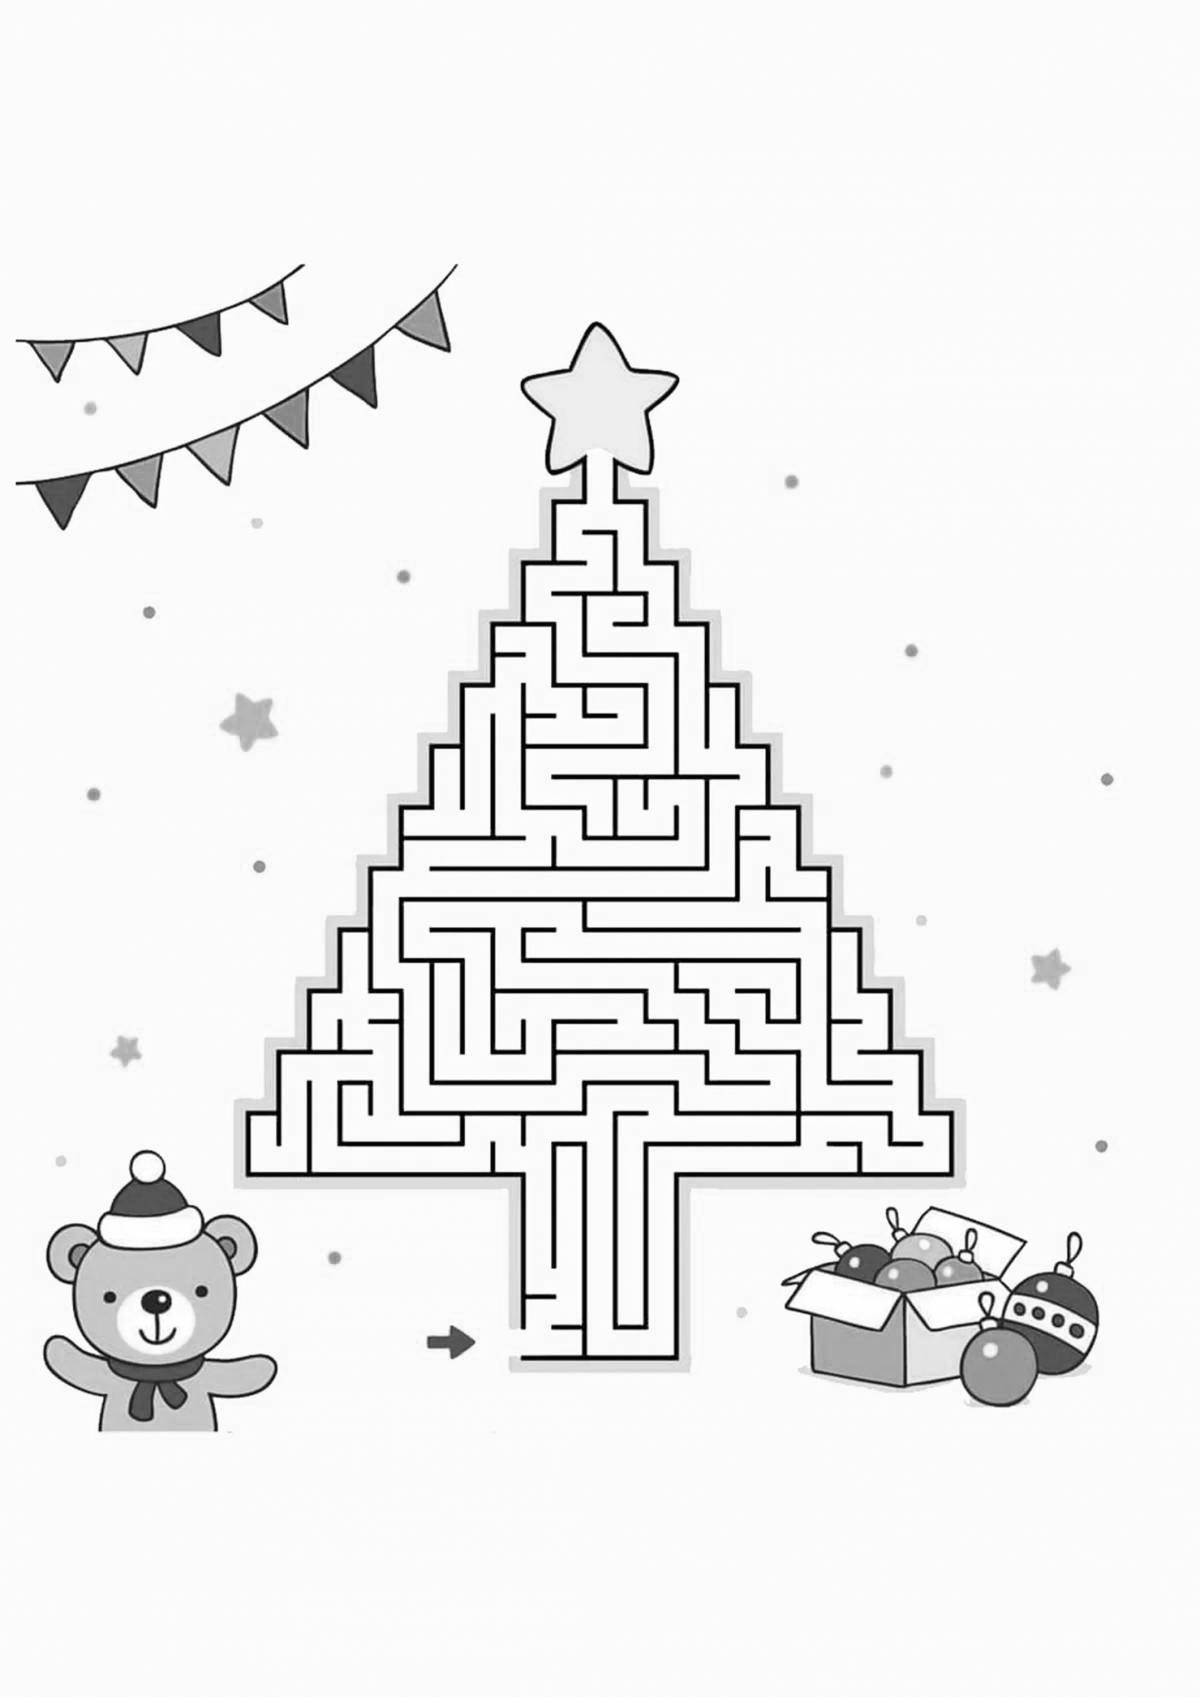 Merry Christmas maze